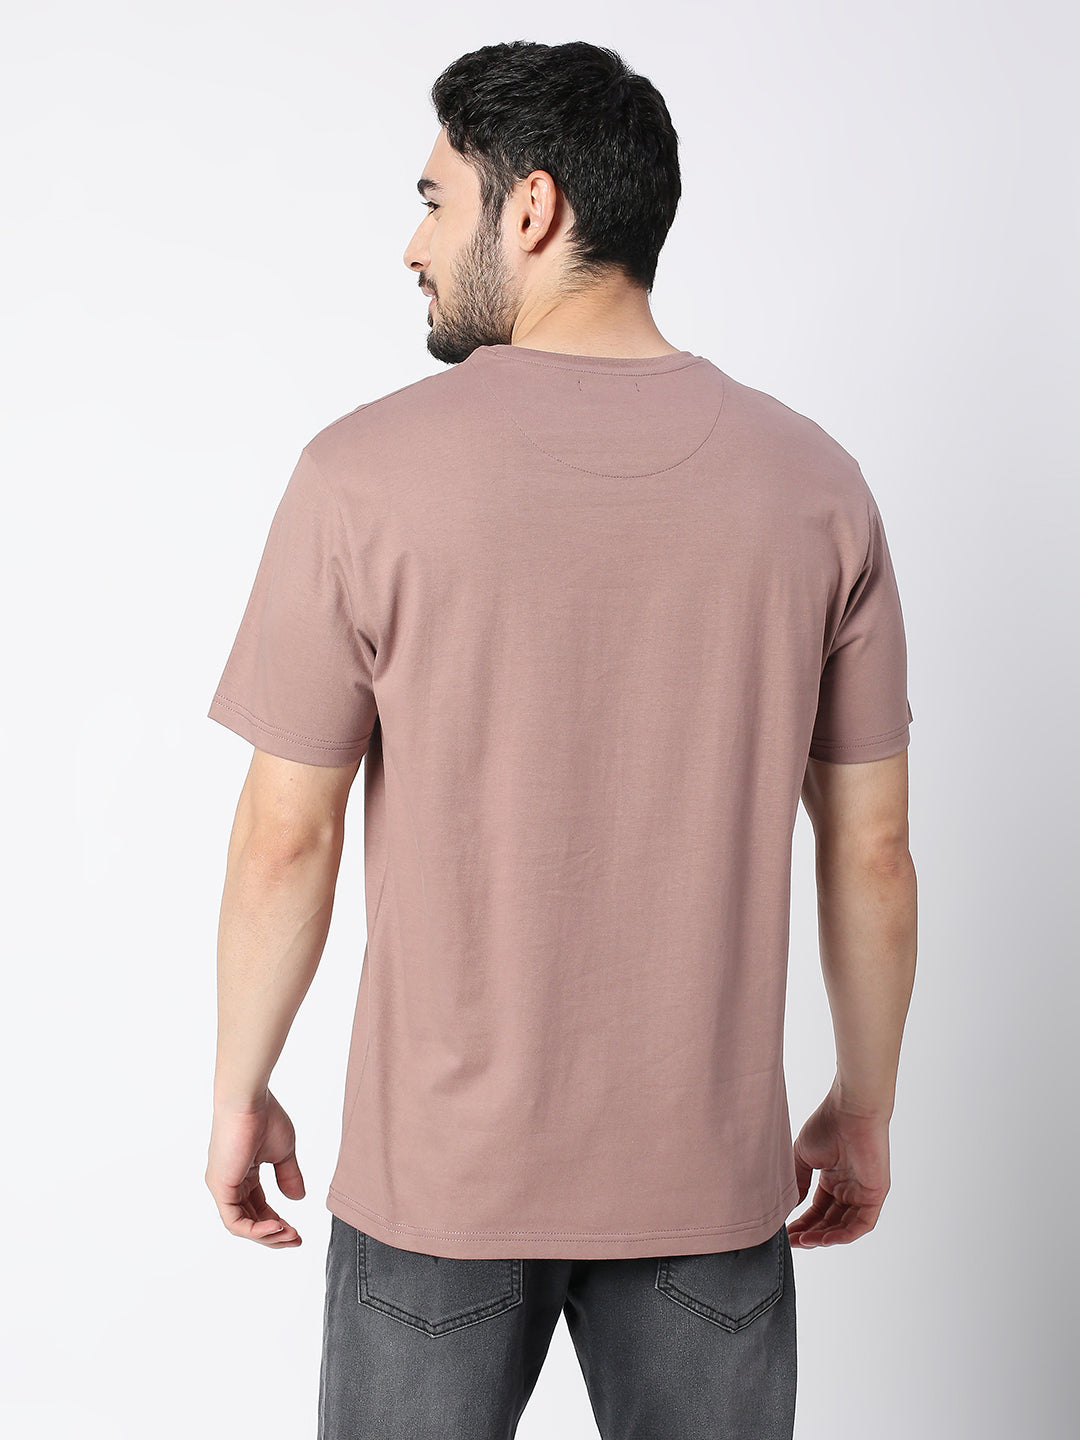 Buy Blamblack Solid Light Brown Half Sleeved T-shirt